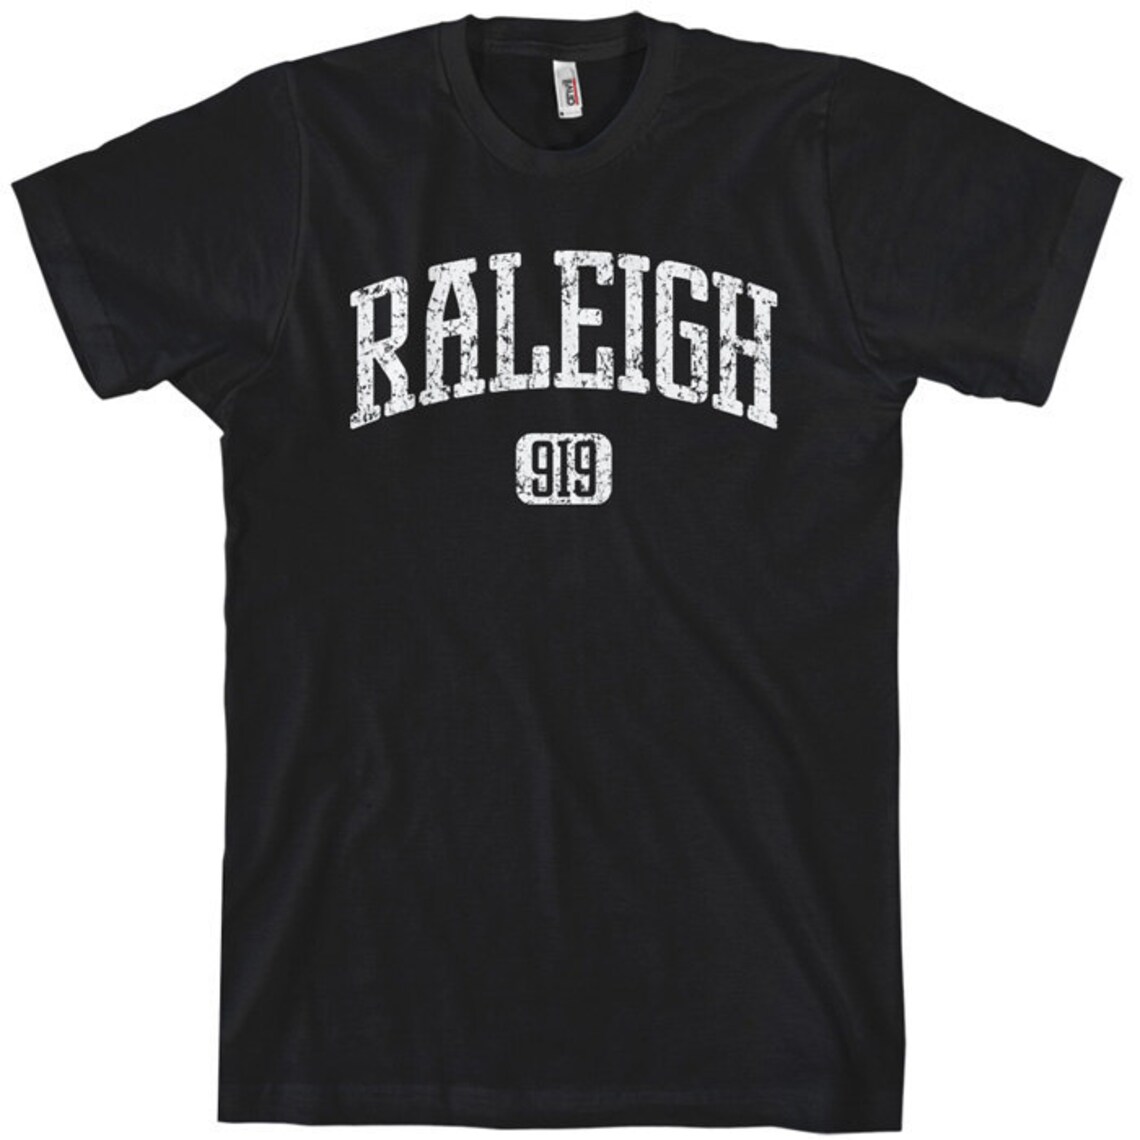 Raleigh T-shirt North Carolina 919 Men and Unisex XS S M | Etsy